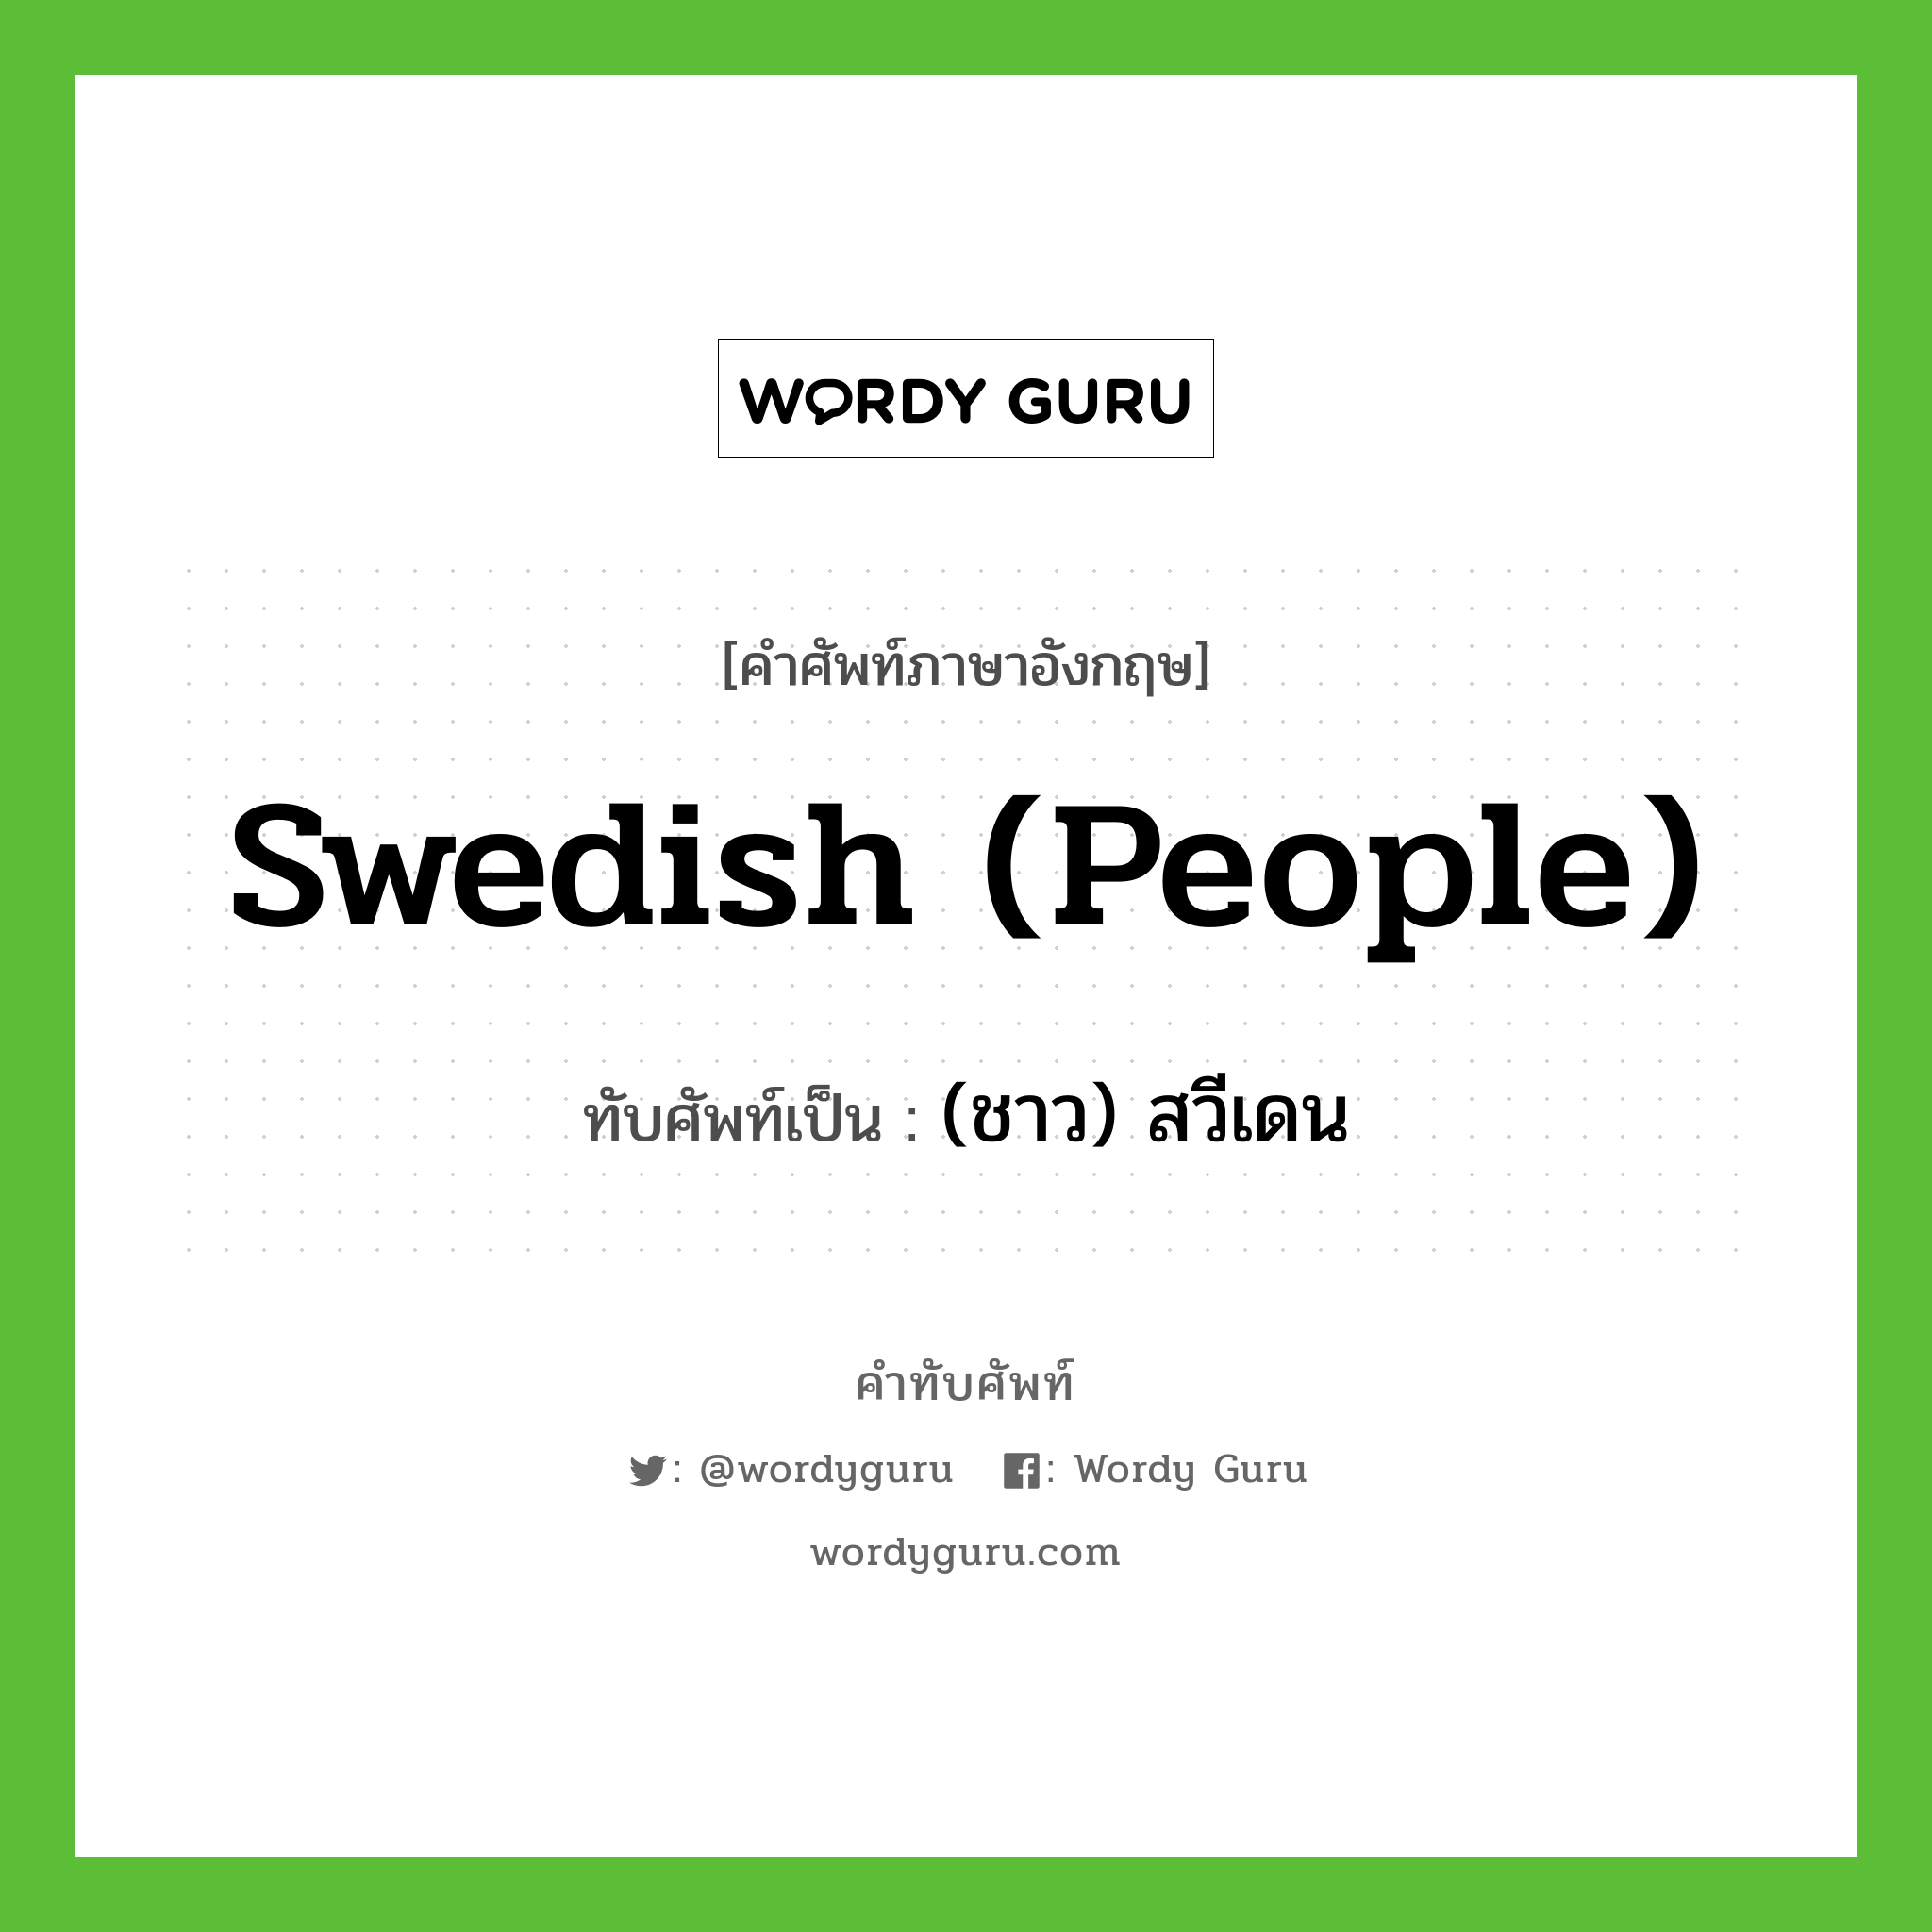 Swedish (people) เขียนเป็นคำไทยว่าอะไร?, คำศัพท์ภาษาอังกฤษ Swedish (people) ทับศัพท์เป็น (ชาว) สวีเดน